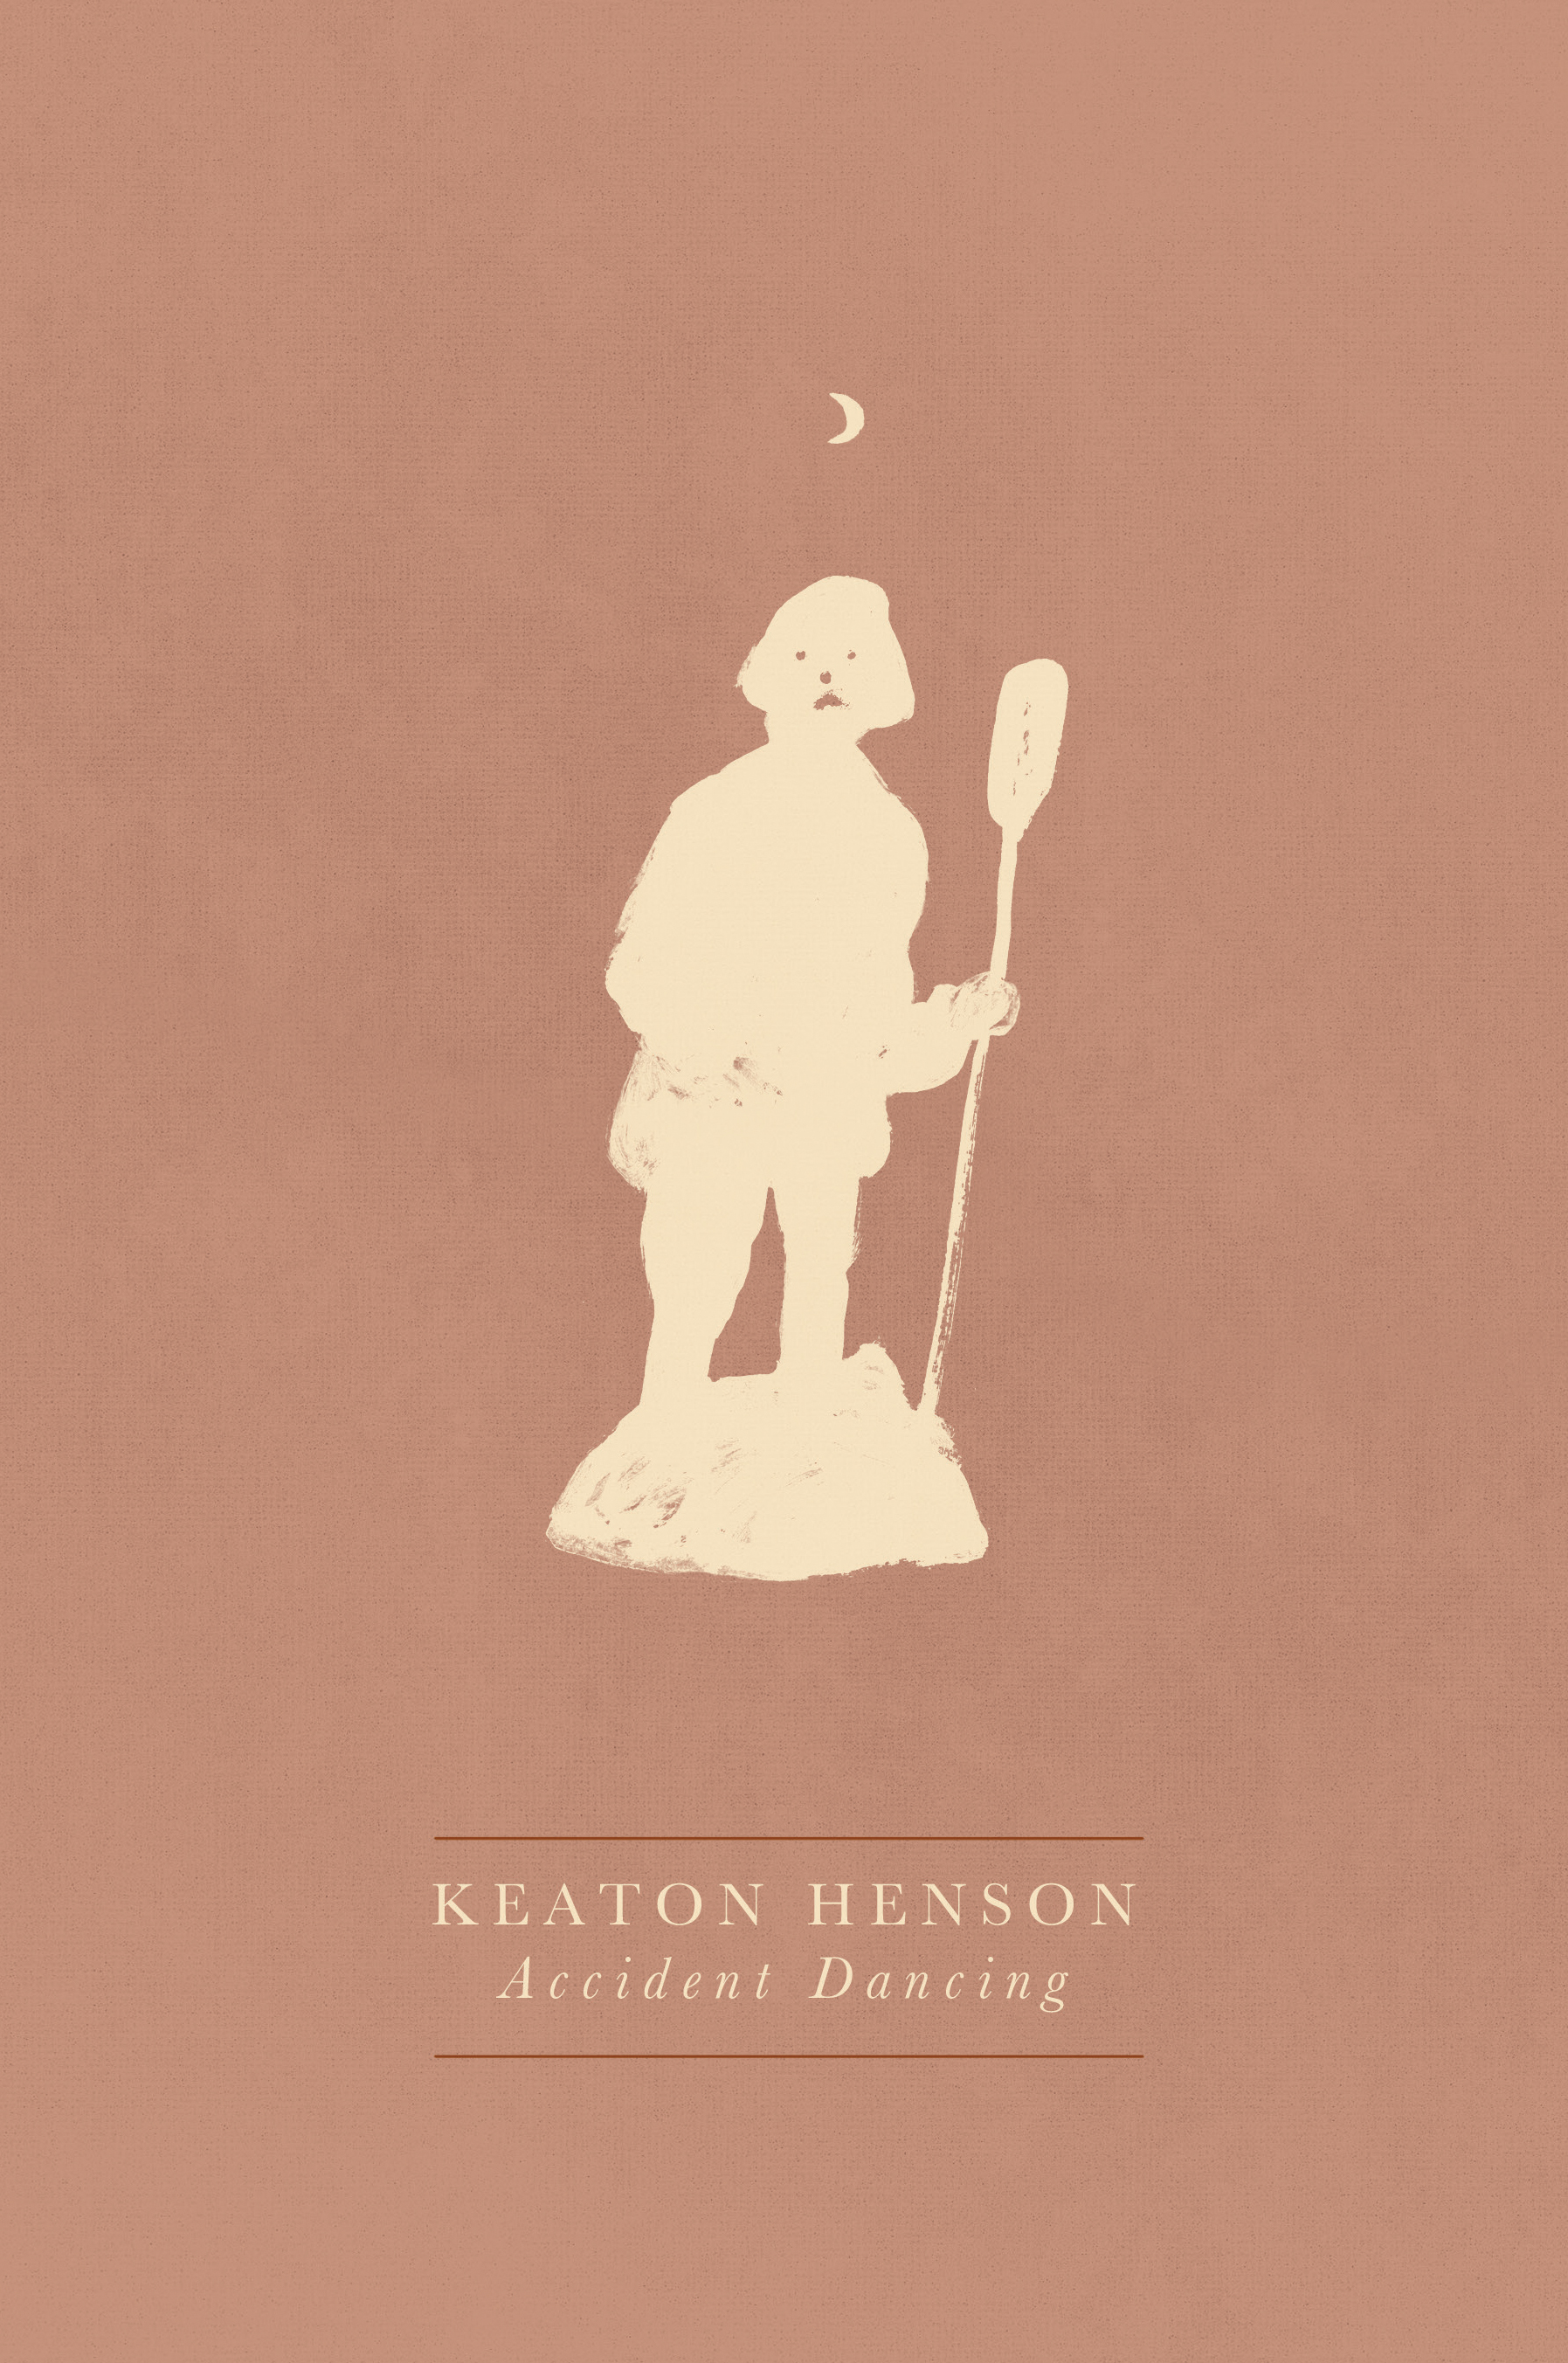 Keaton Henson: Accident Dancing: Biography